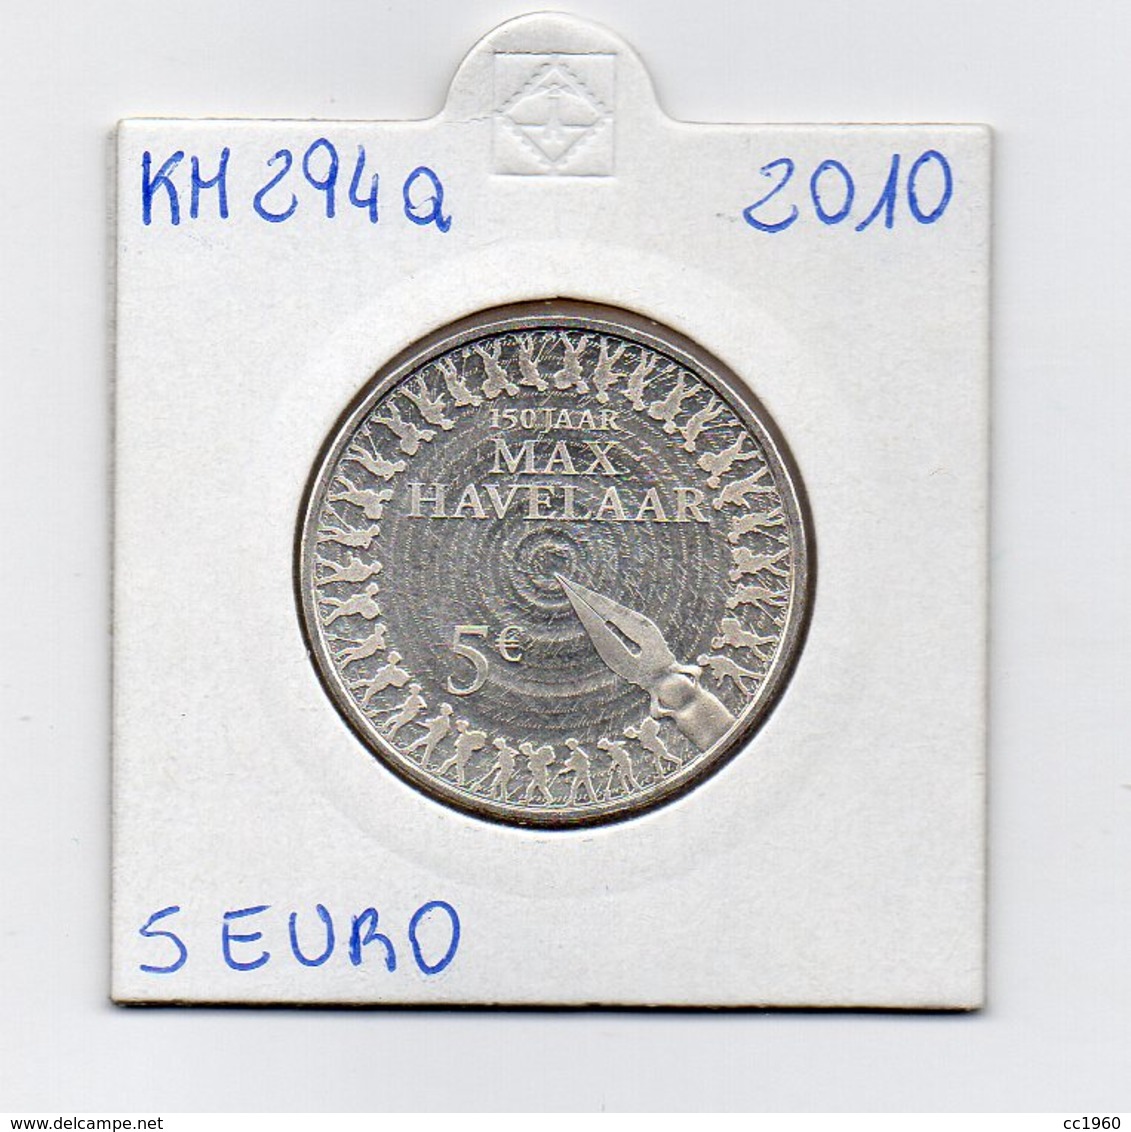 Paesi Bassi - 2010 - Moneta 5 Euro - 150 Anni Max Havelaar - Vedi Foto - (MW1910) - Paesi Bassi